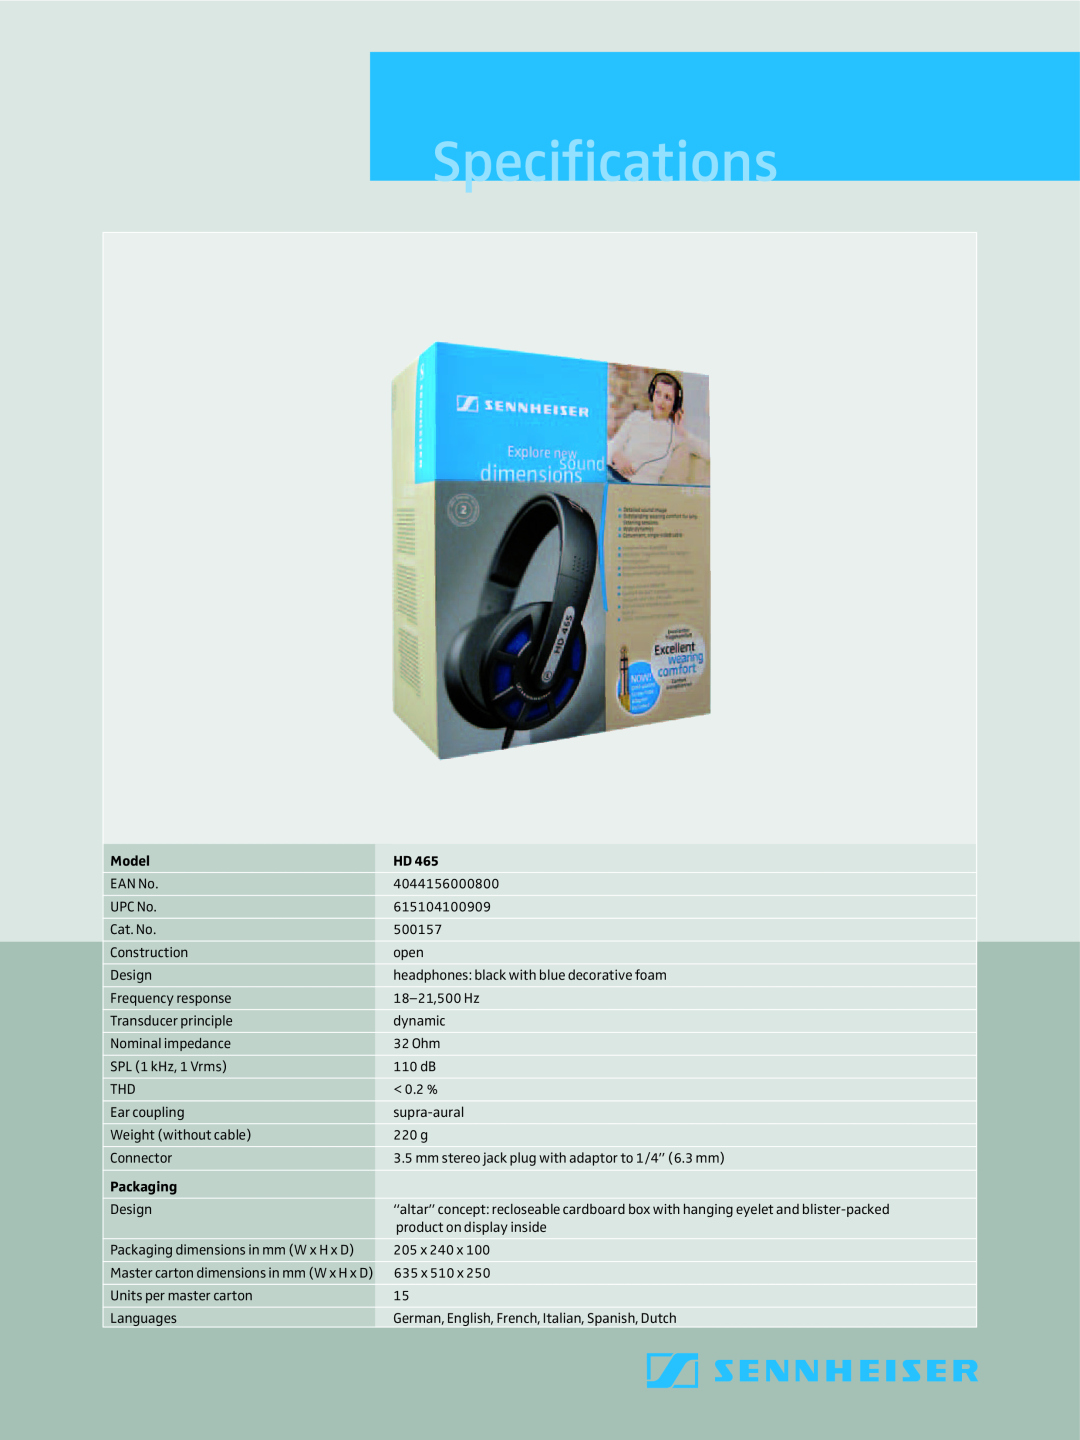 Sennheiser HD 465 dimensions Specifications, Model, HD465, Packaging 